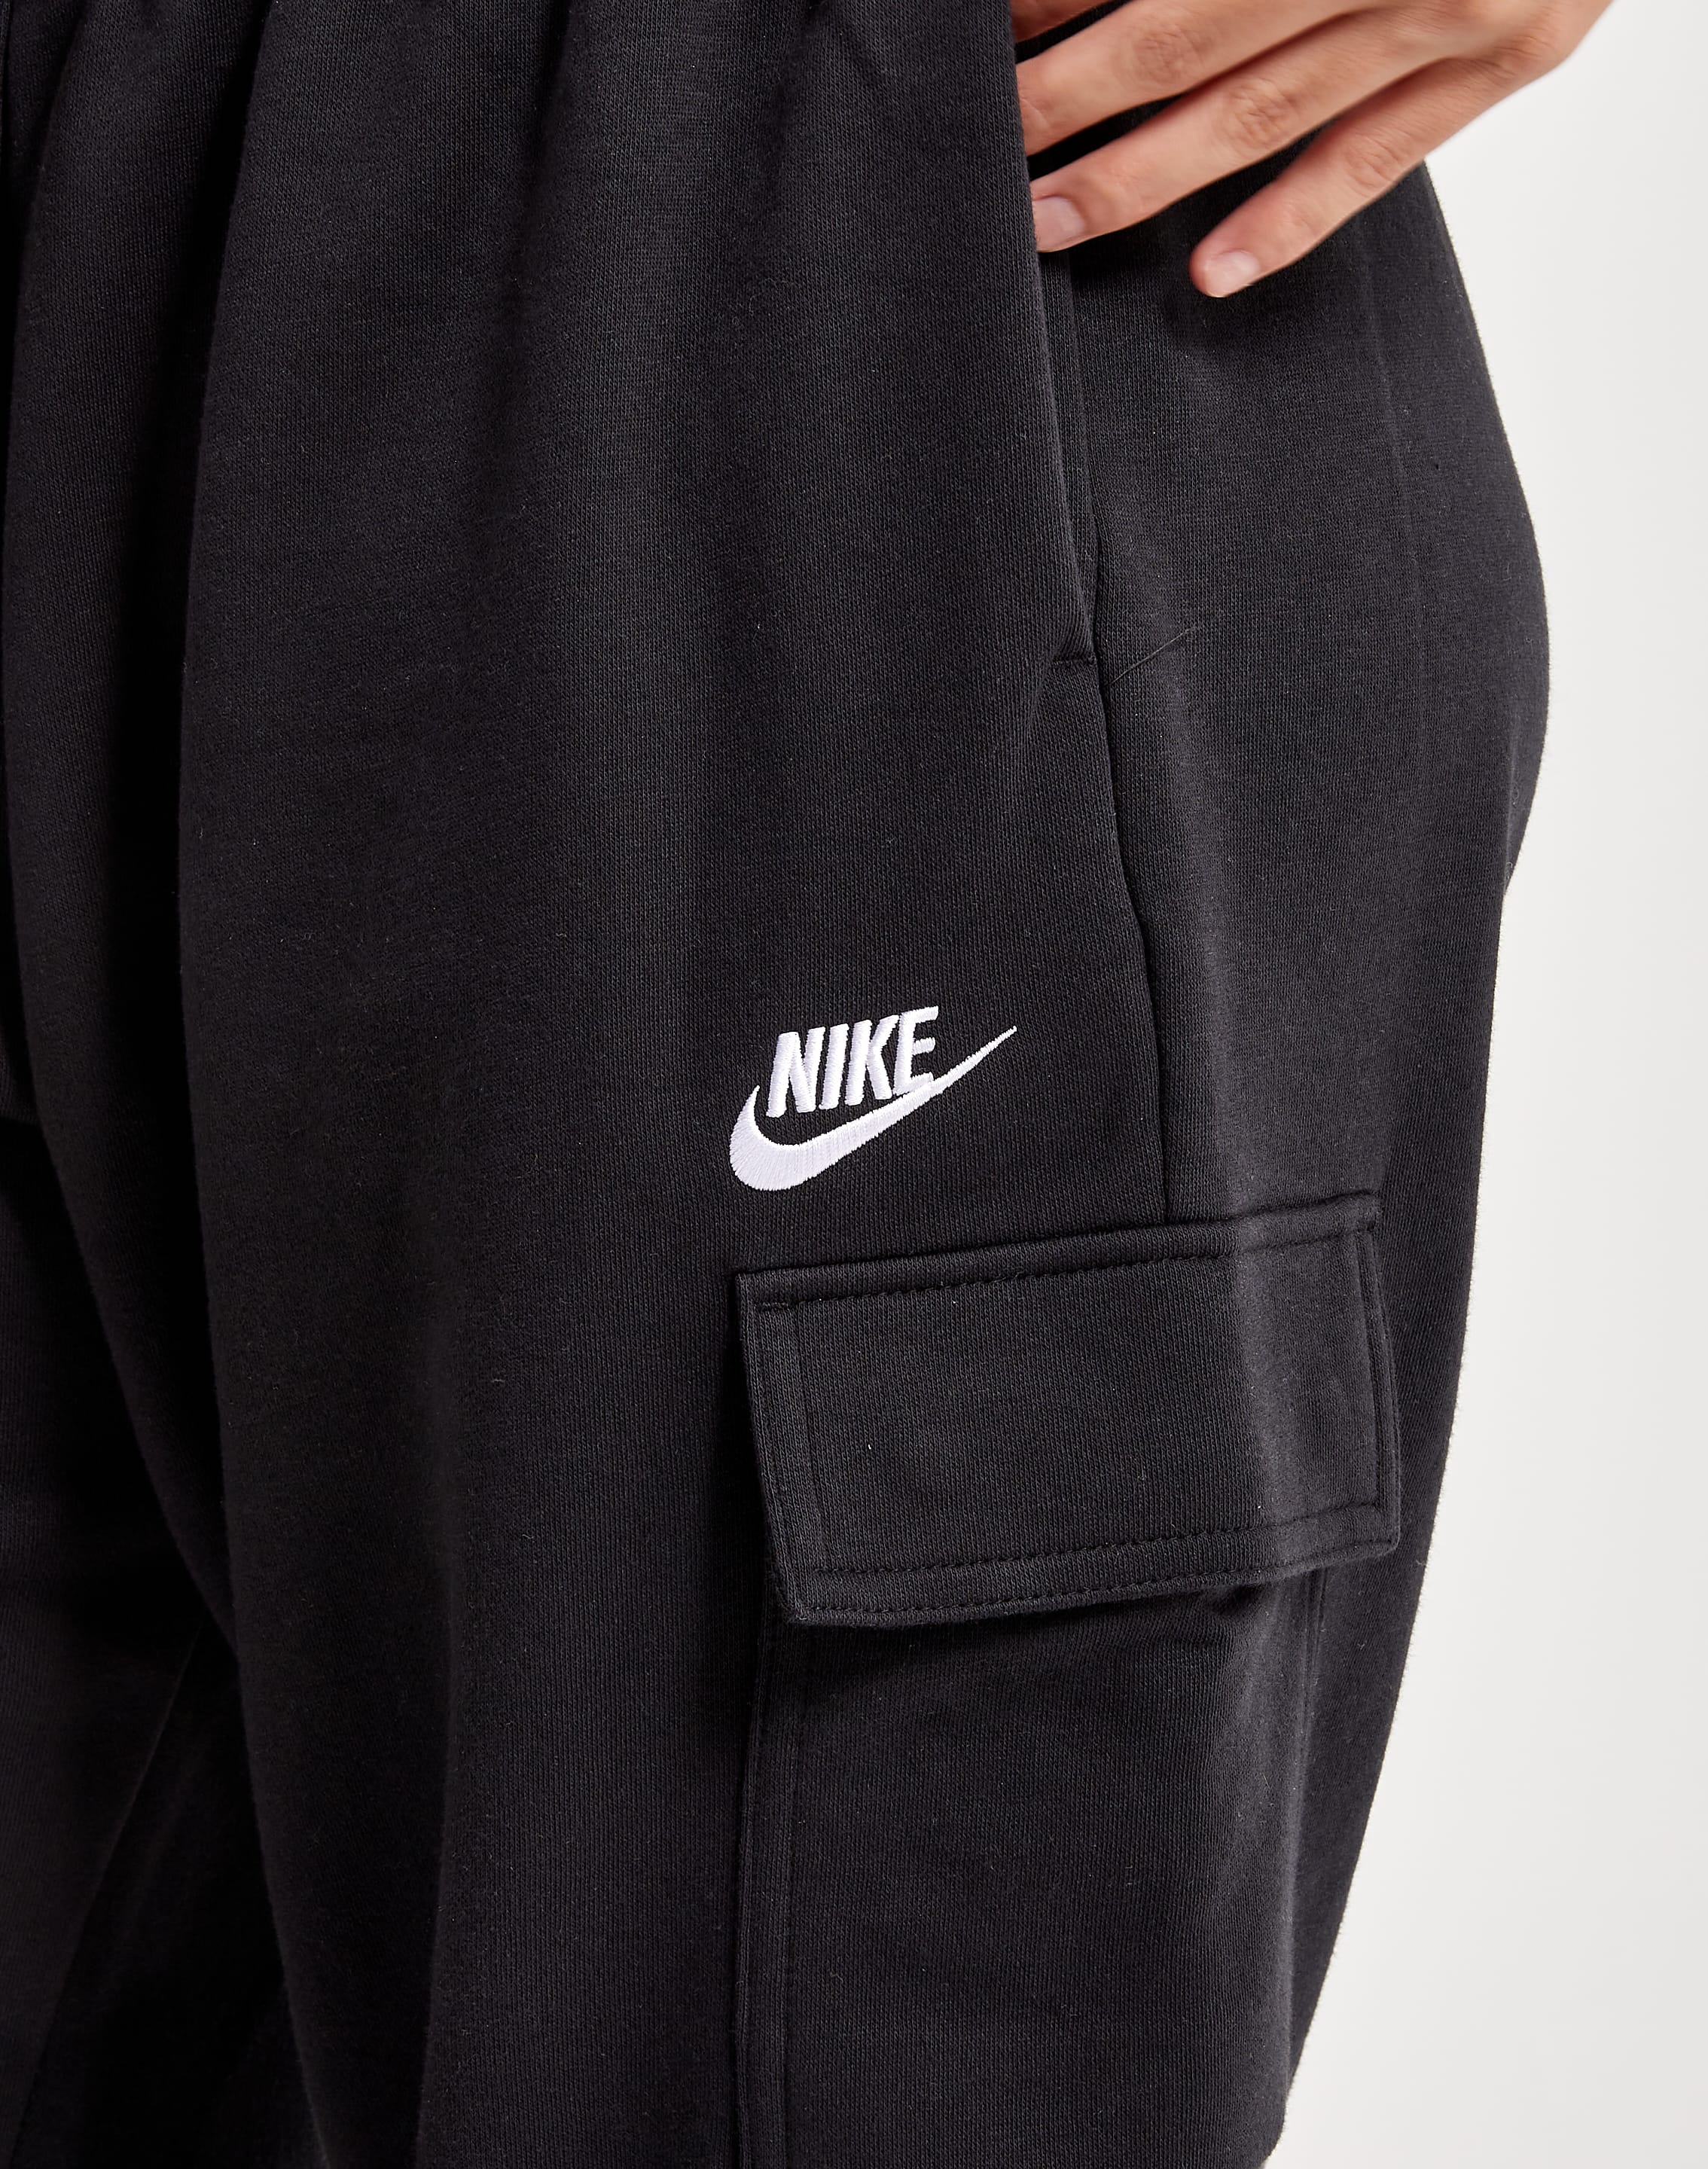 Buy Nike Little Girls` Therma-Fit Full Zip Hoodie & Jogging Pants 2 Piece  Set at Amazon.in